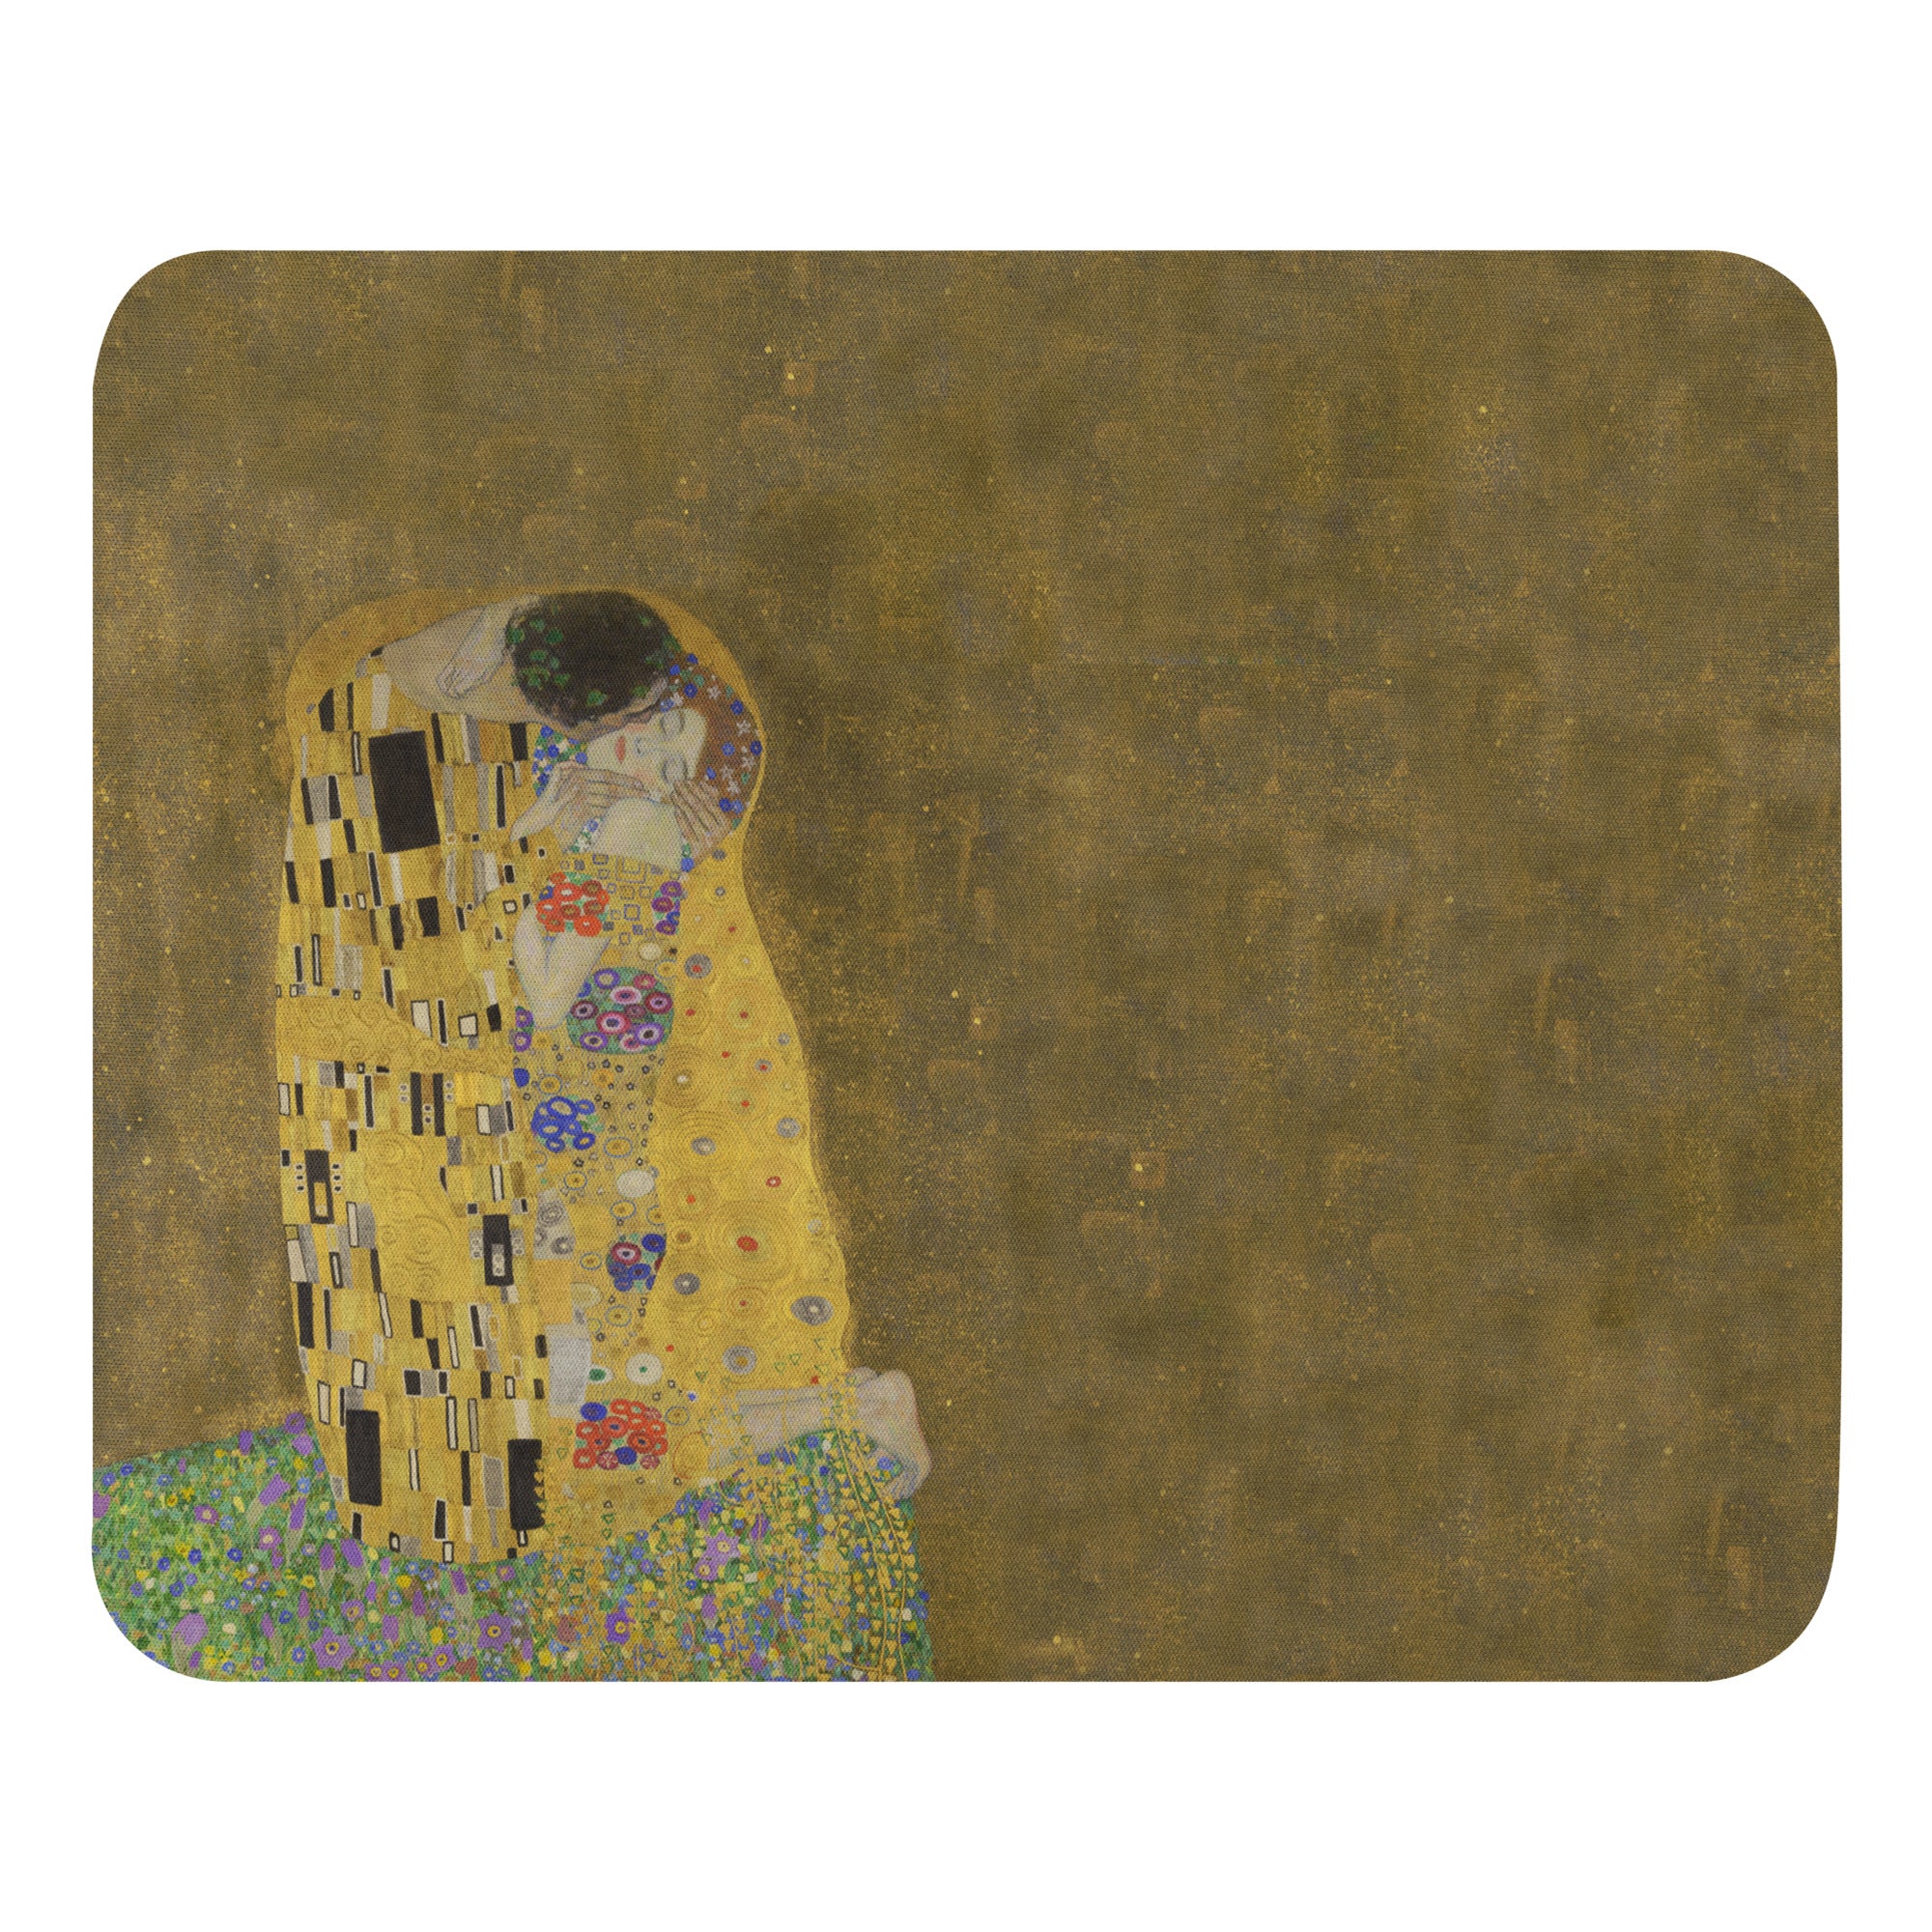 Gustav Klimt 'The Kiss' Famous Painting Mouse Pad | Premium Art Mouse Pad